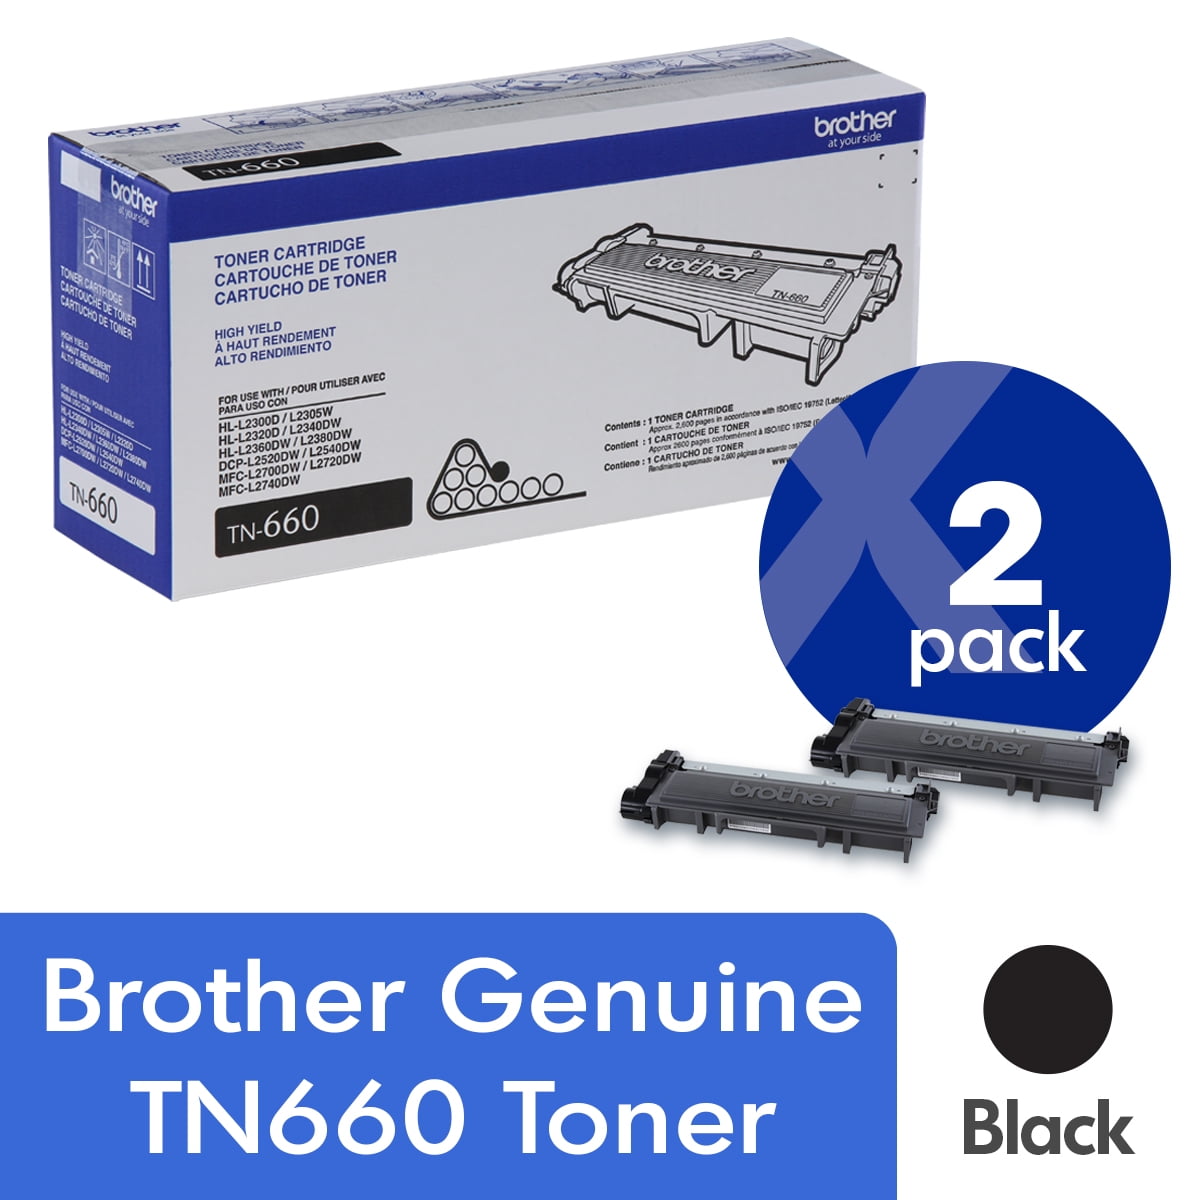 LINKYO, Printer Toner Cartridge, LY-BR-TN660, Black